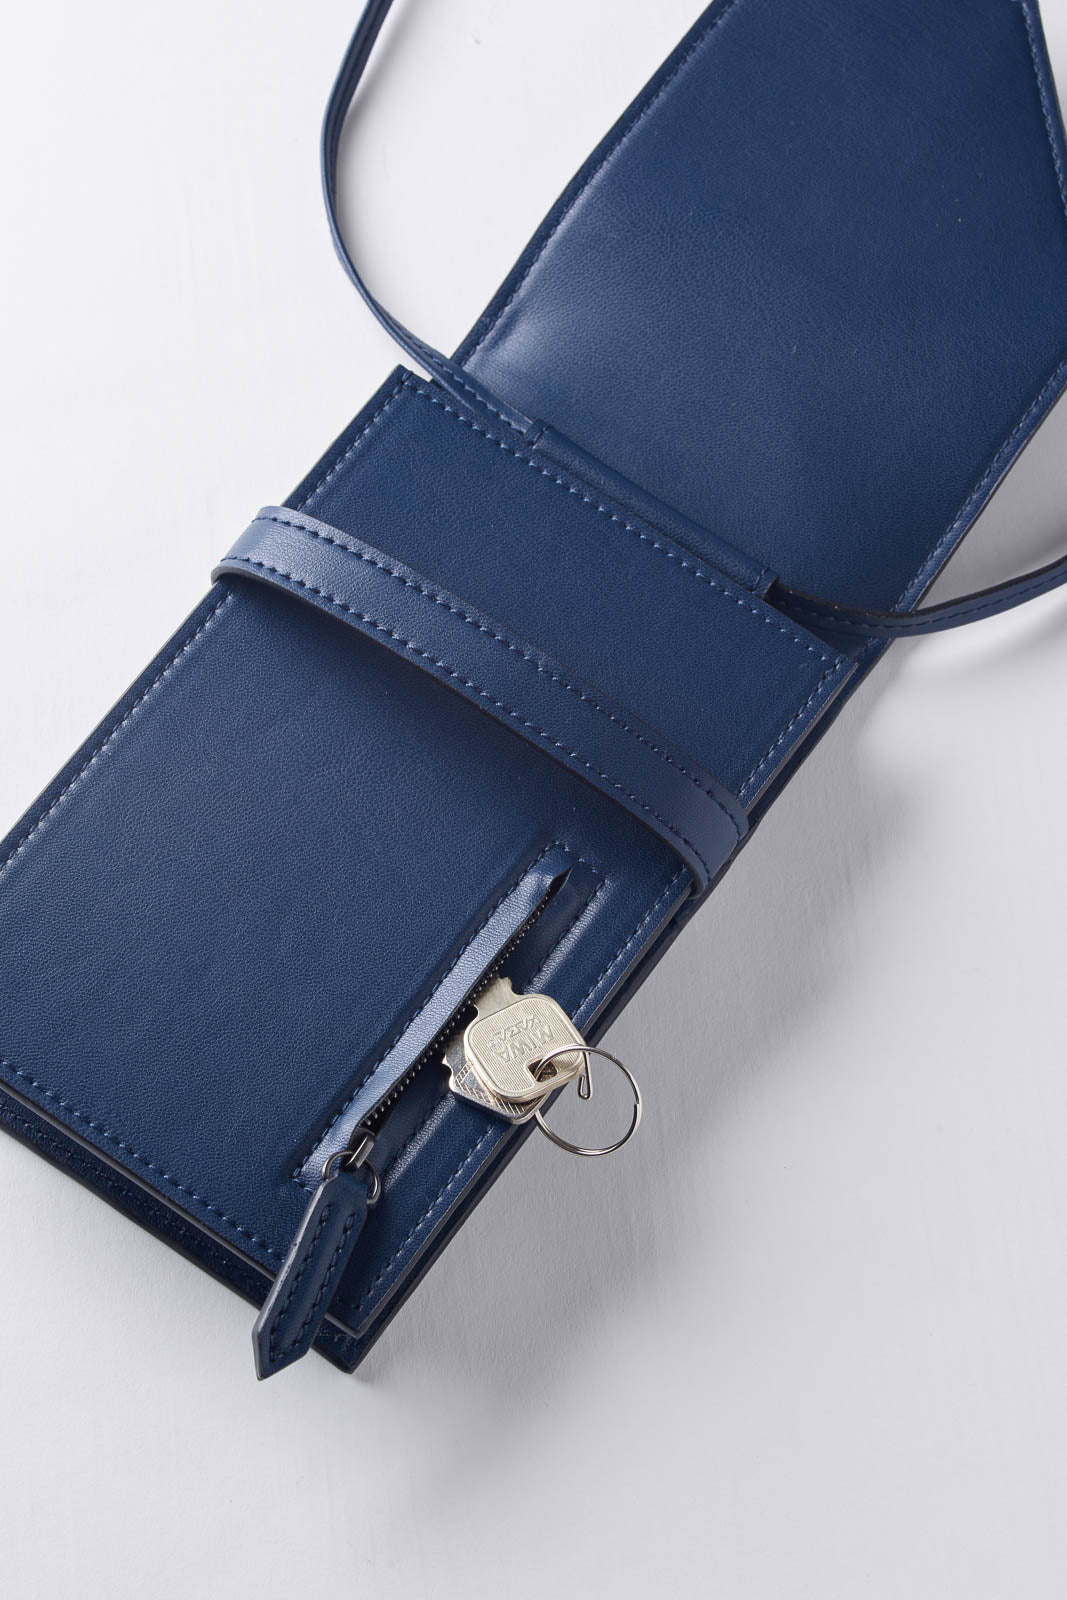 Apple leather crossbody smartphone shoulder purse